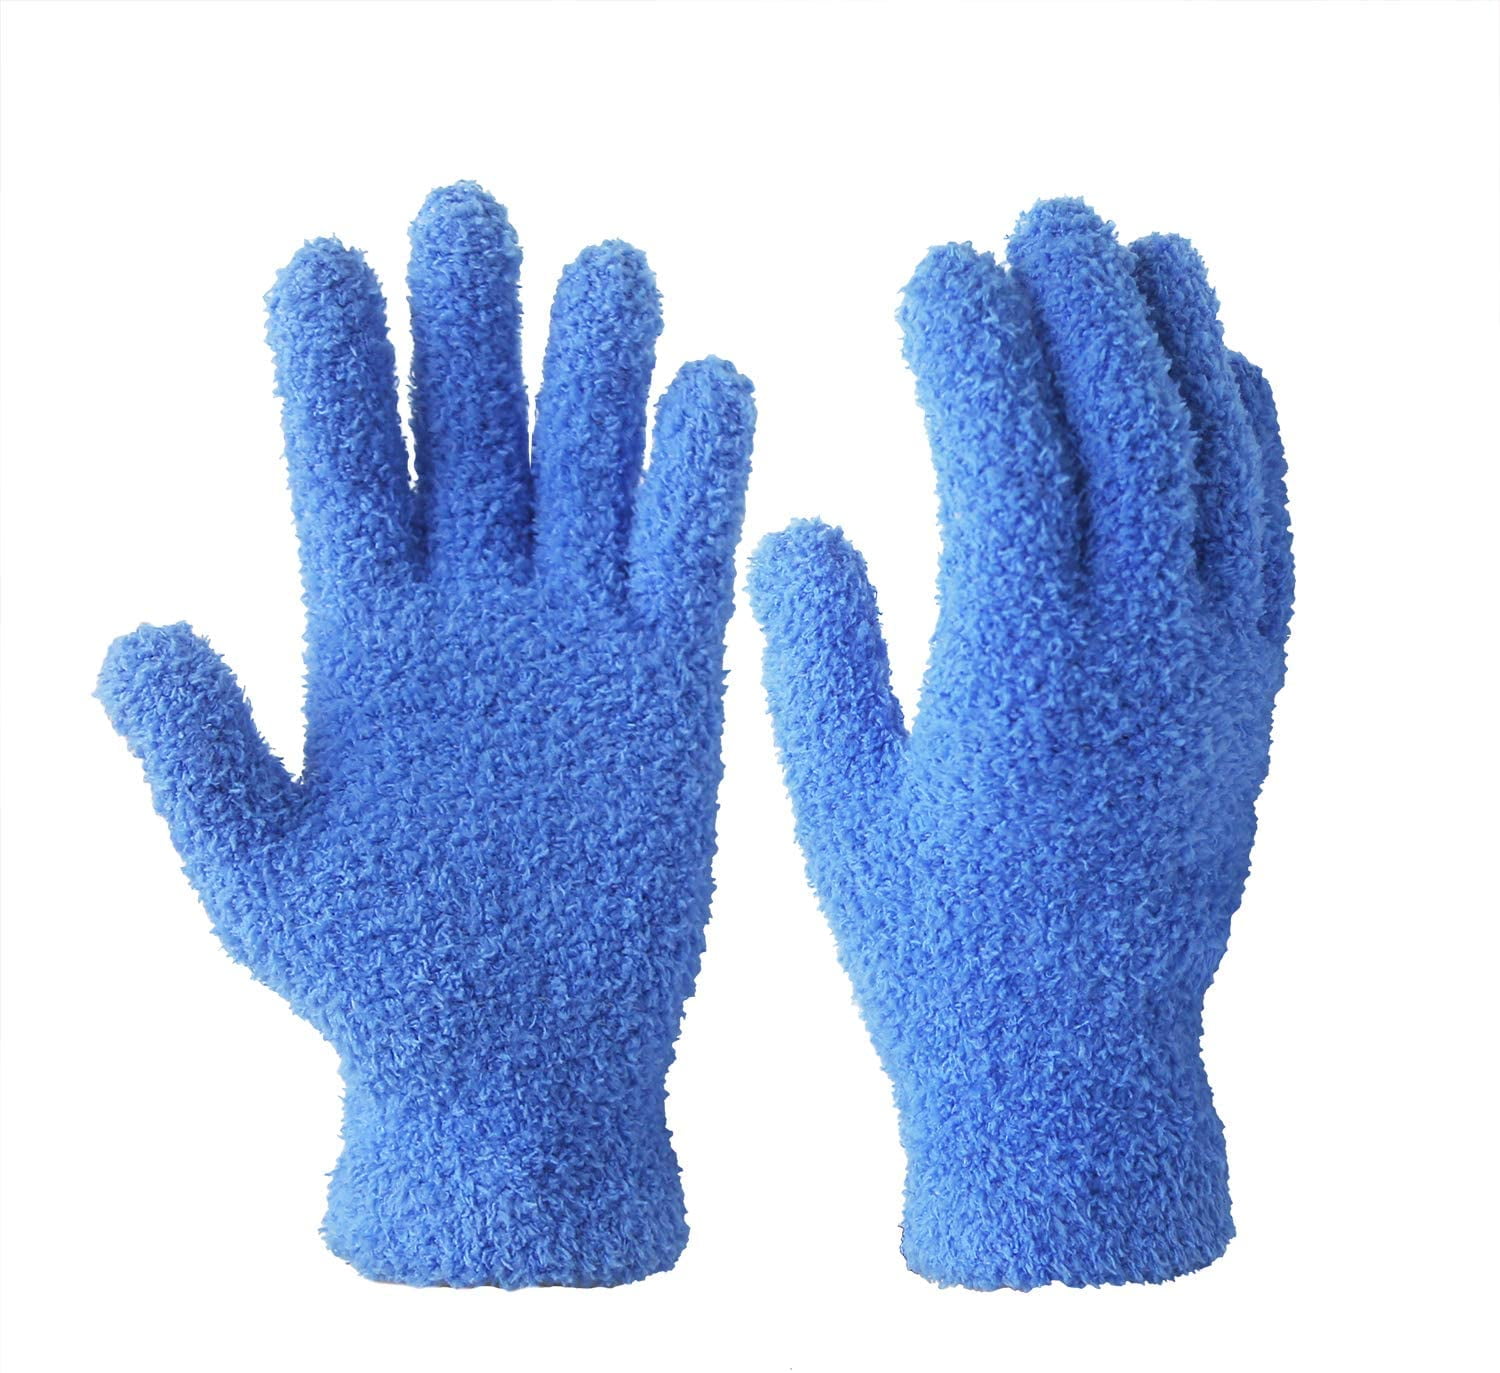  Bencailor 4 Pair Microfiber Dusting Gloves, Washable Reusable  Cleaning Gloves for House Cleaning, Car Blinds, Dark Blue, Gray, Khaki,  Black : Health & Household